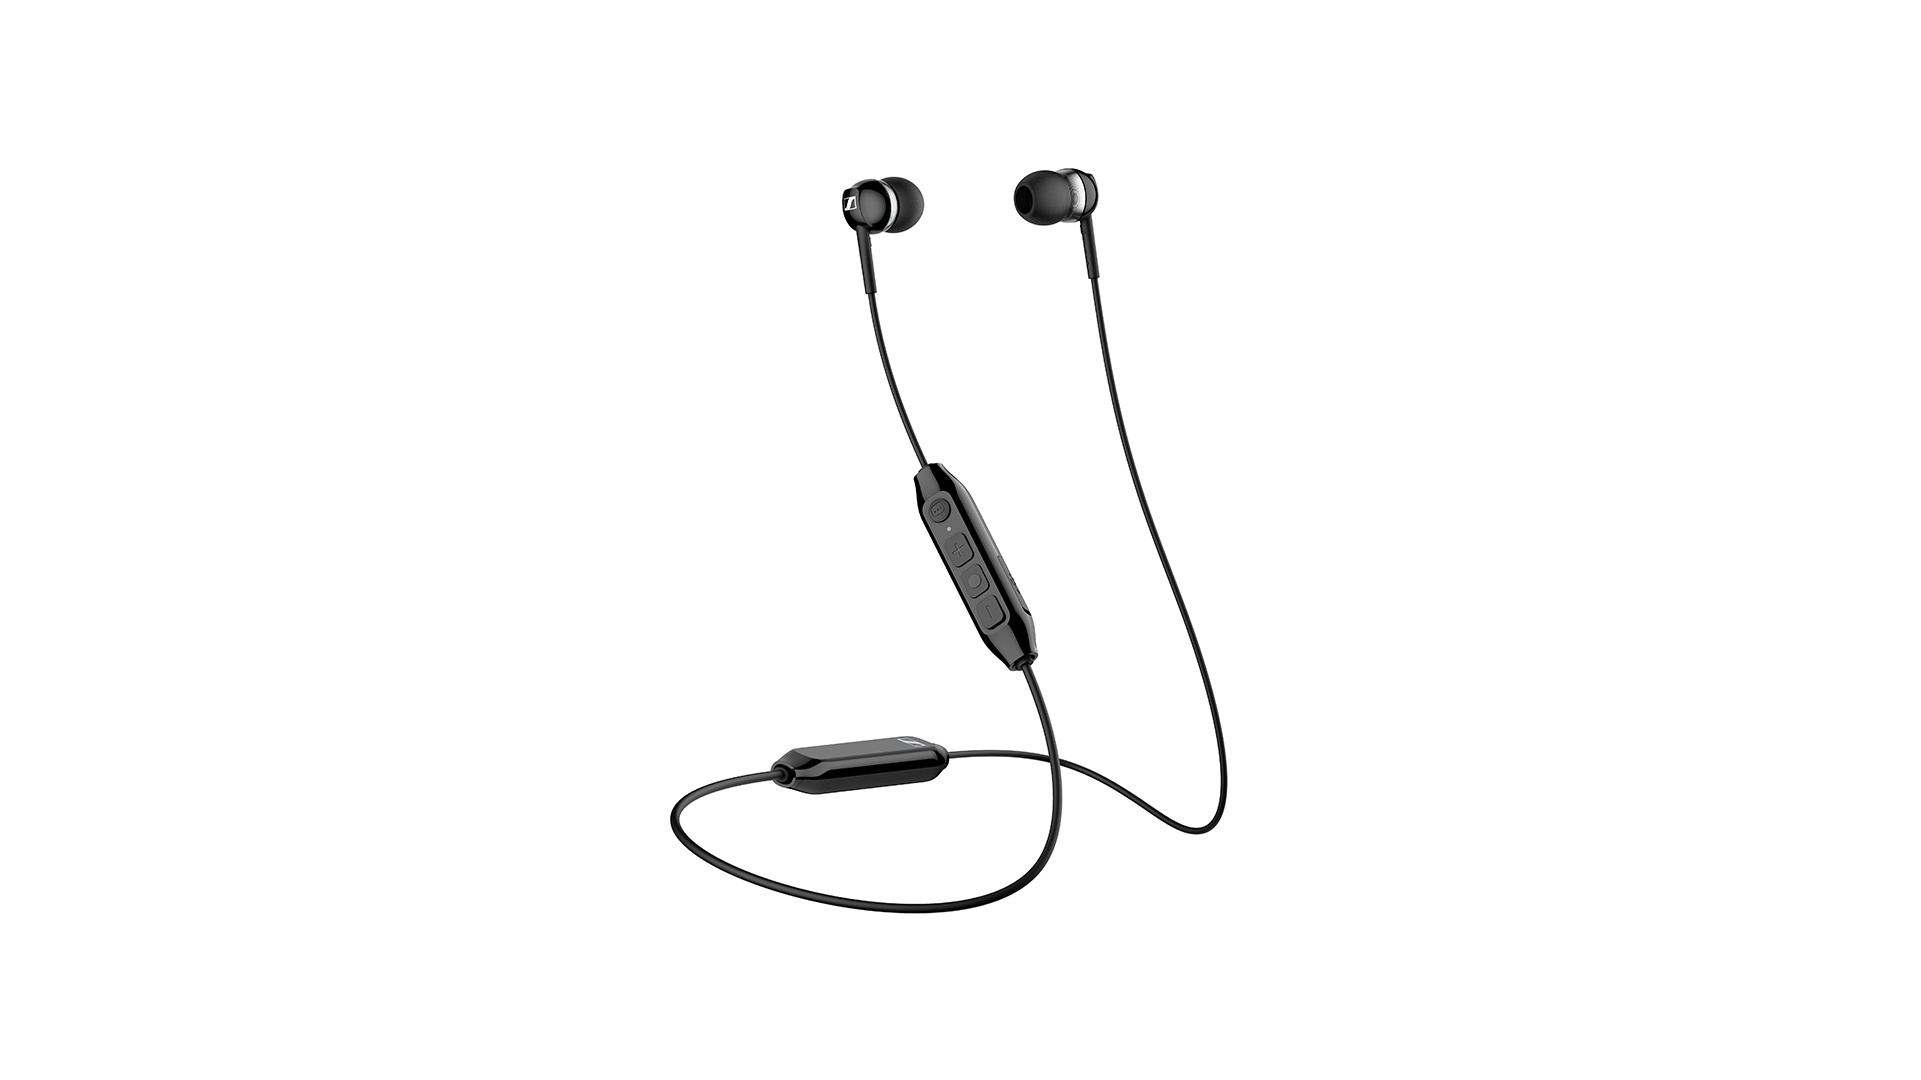  Sennheiser Consumer AudioHD 350BT Black Bluetooth 5.0 Wireless  Headphone - 30-Hour Battery Life, USB-C Fast Charging, Virtual Assistant  Button, Foldable - Black : Electronics